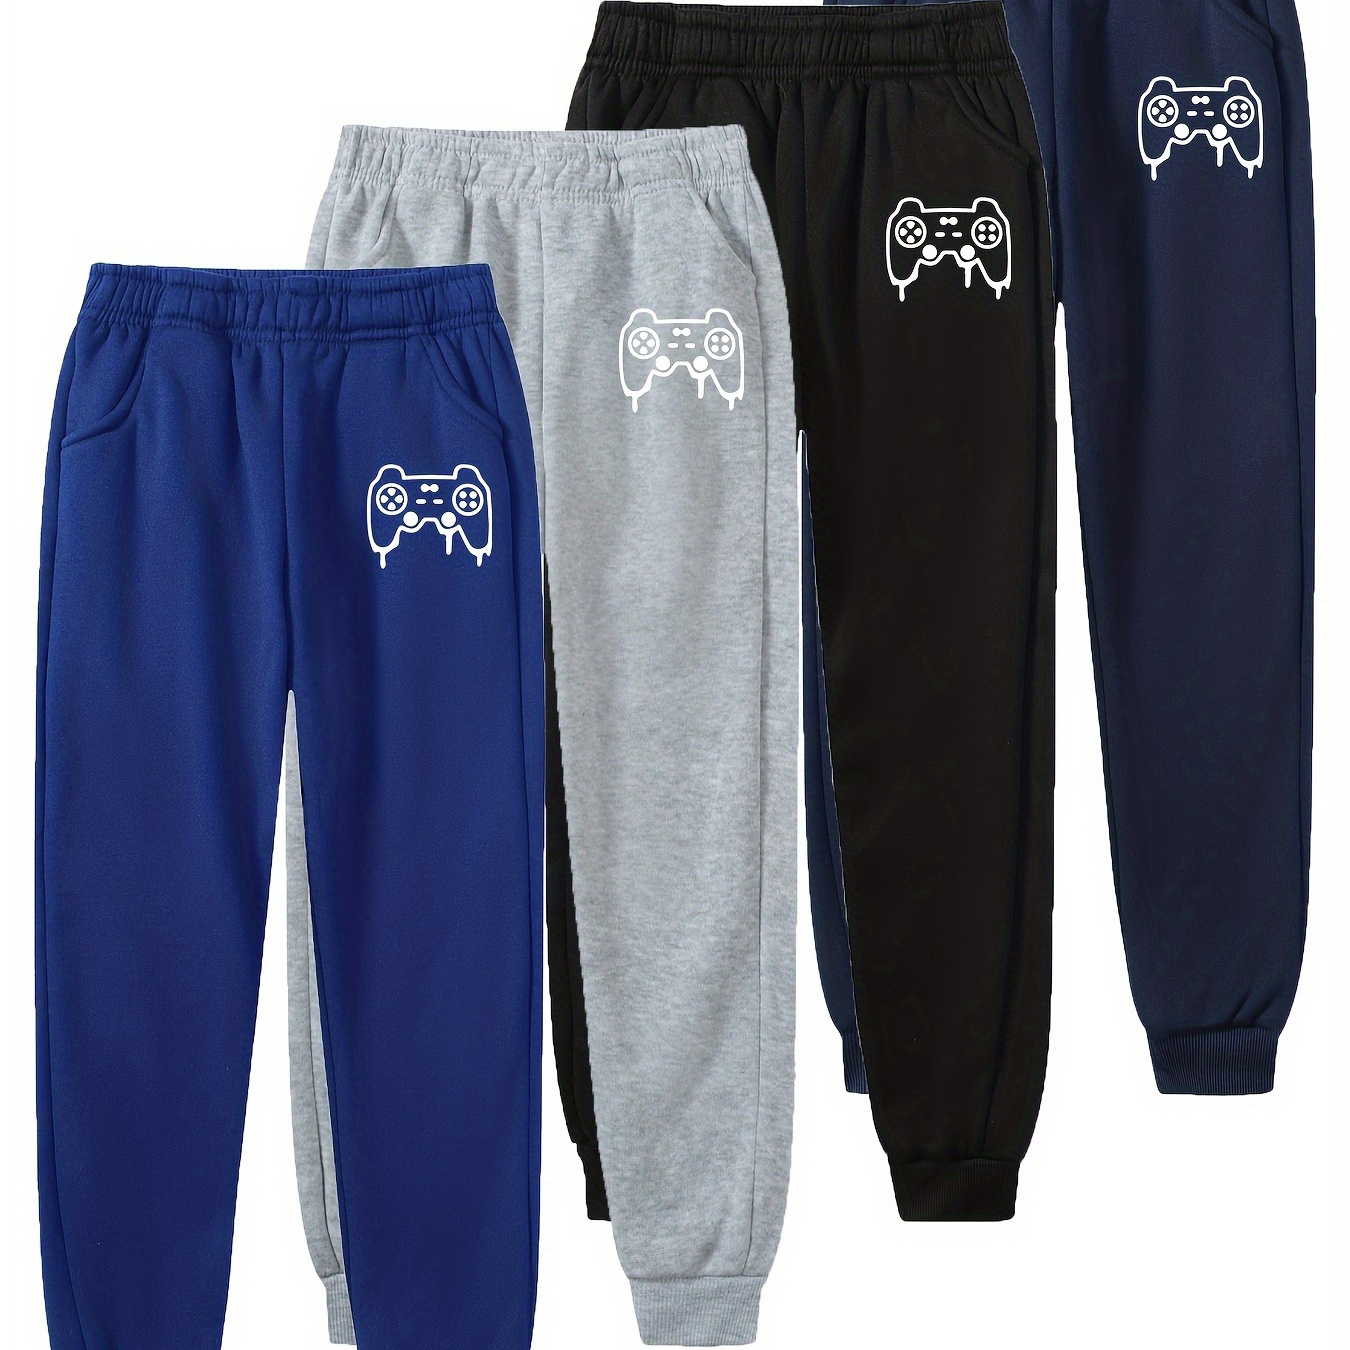 

4pcs - Cool Casual Boys' Summer Pants - Gamepad Print Jogger Trousers - Outdoor Sweatpants Sport Gift